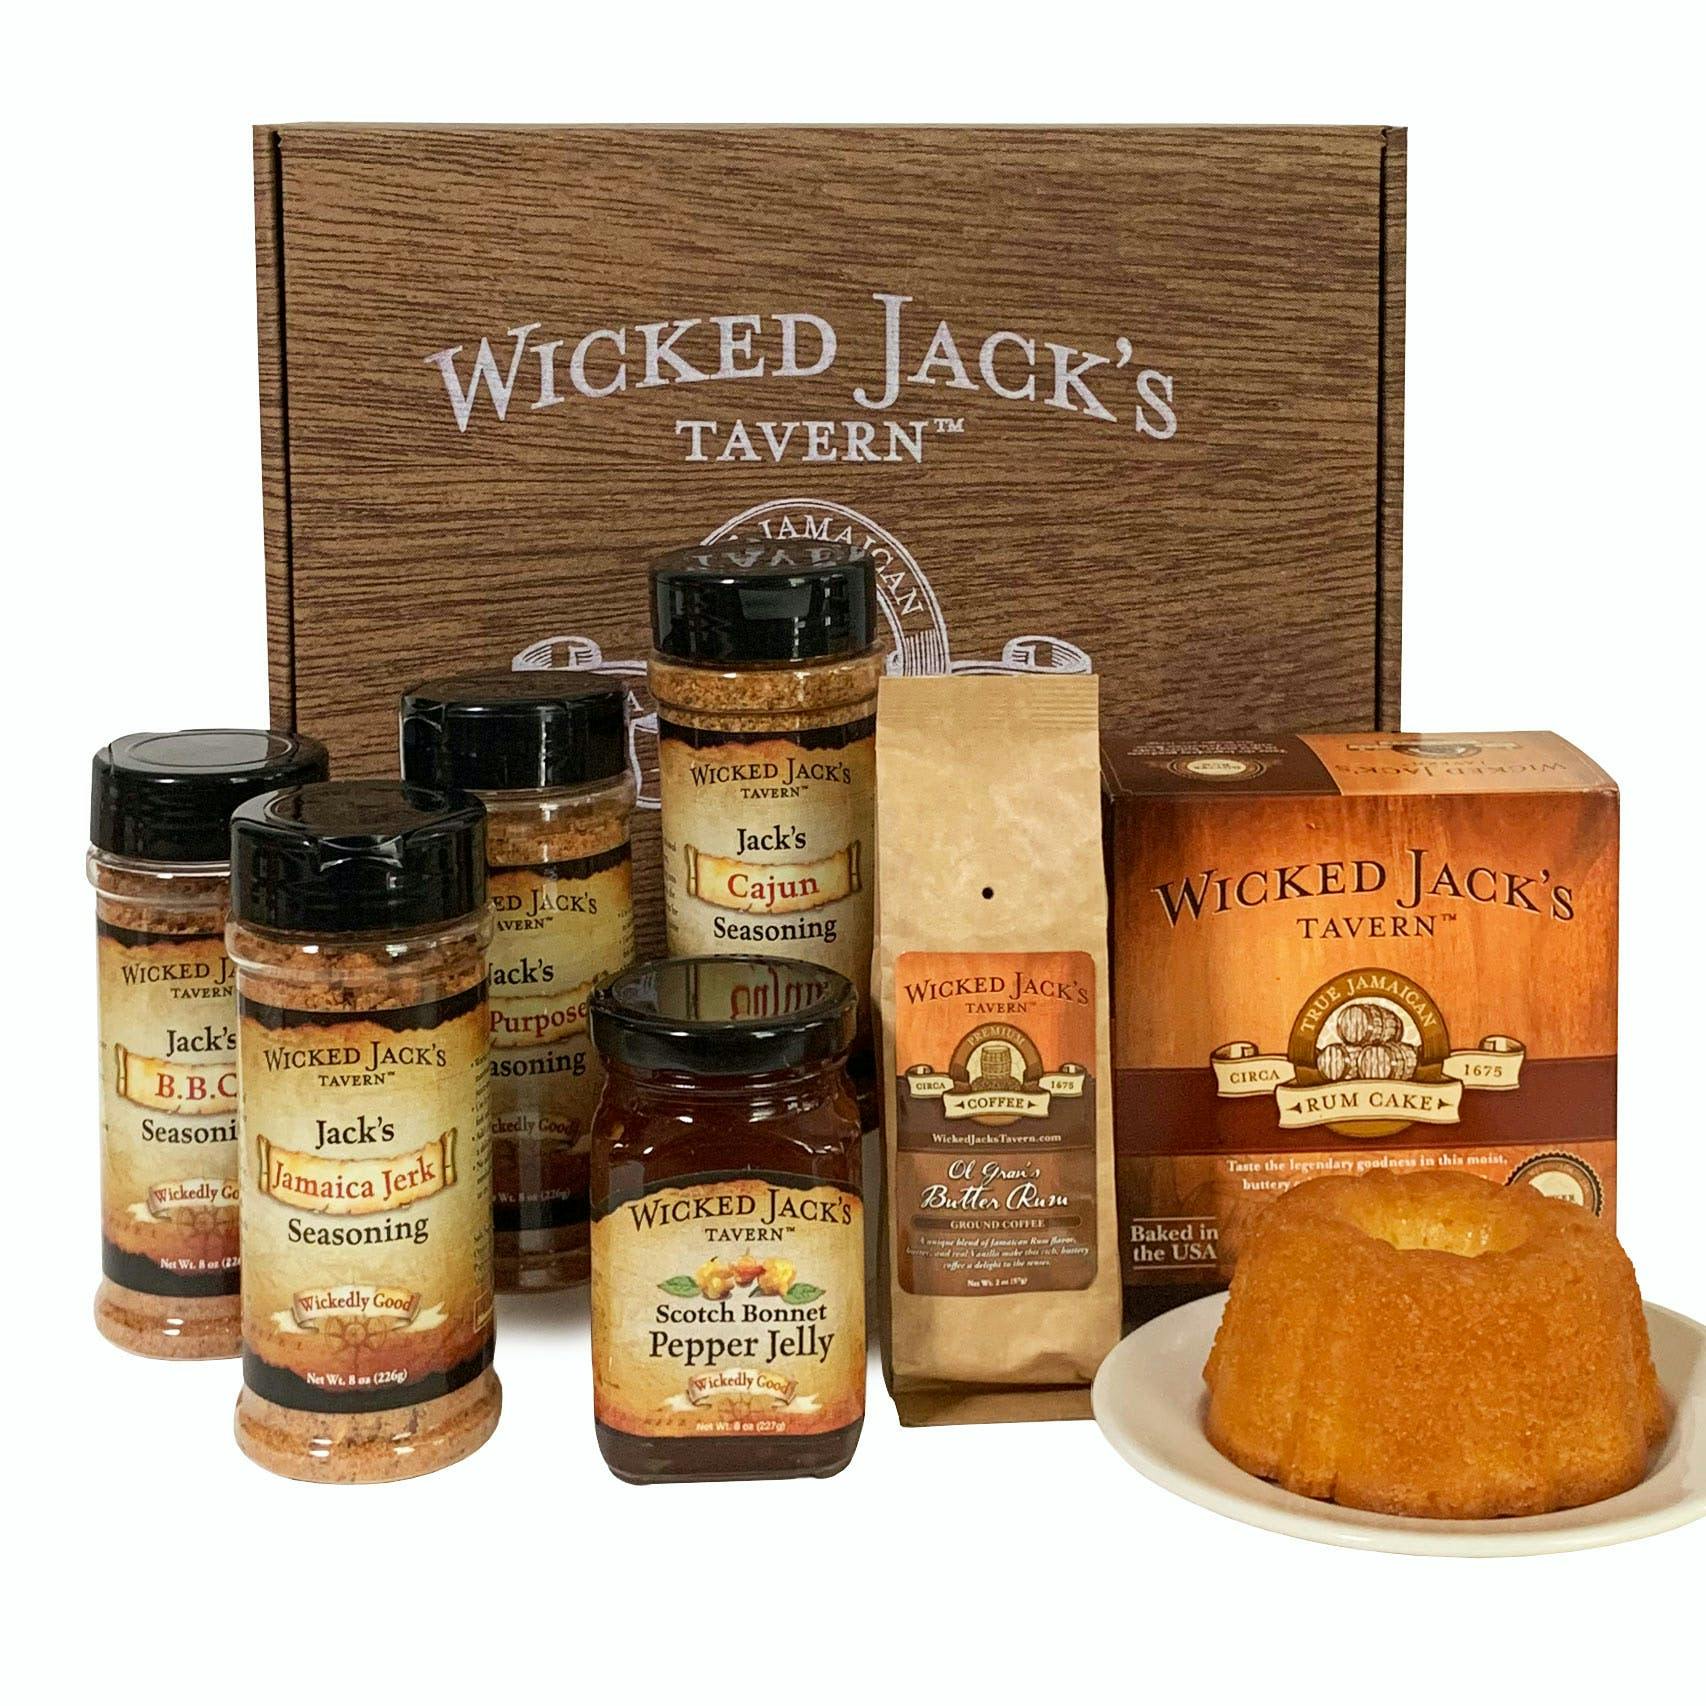 https://goldbelly.imgix.net/uploads/showcase_media_asset/image/123386/wicked-jacks-sugar-and-spice-gift-box.558af87f4e9abcb48799aed0b46370da.jpeg?ixlib=rails-3.0.2